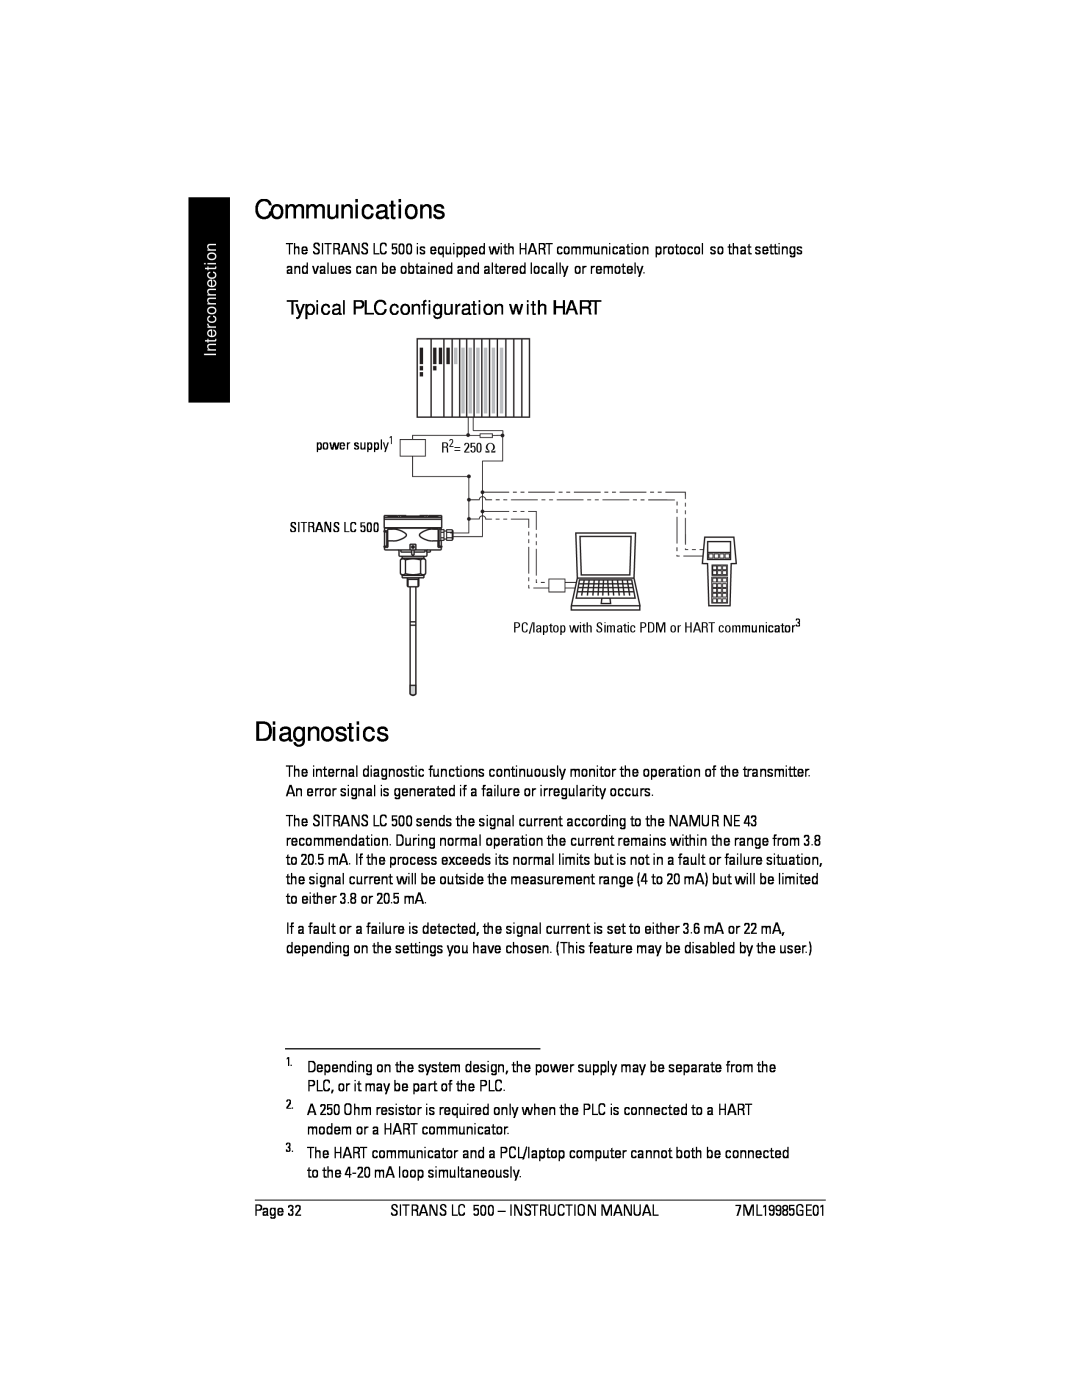 Siemens LC 500, Sitrans instruction manual Communications, Diagnostics, Typical PLC configuration with HART, Interconnection 